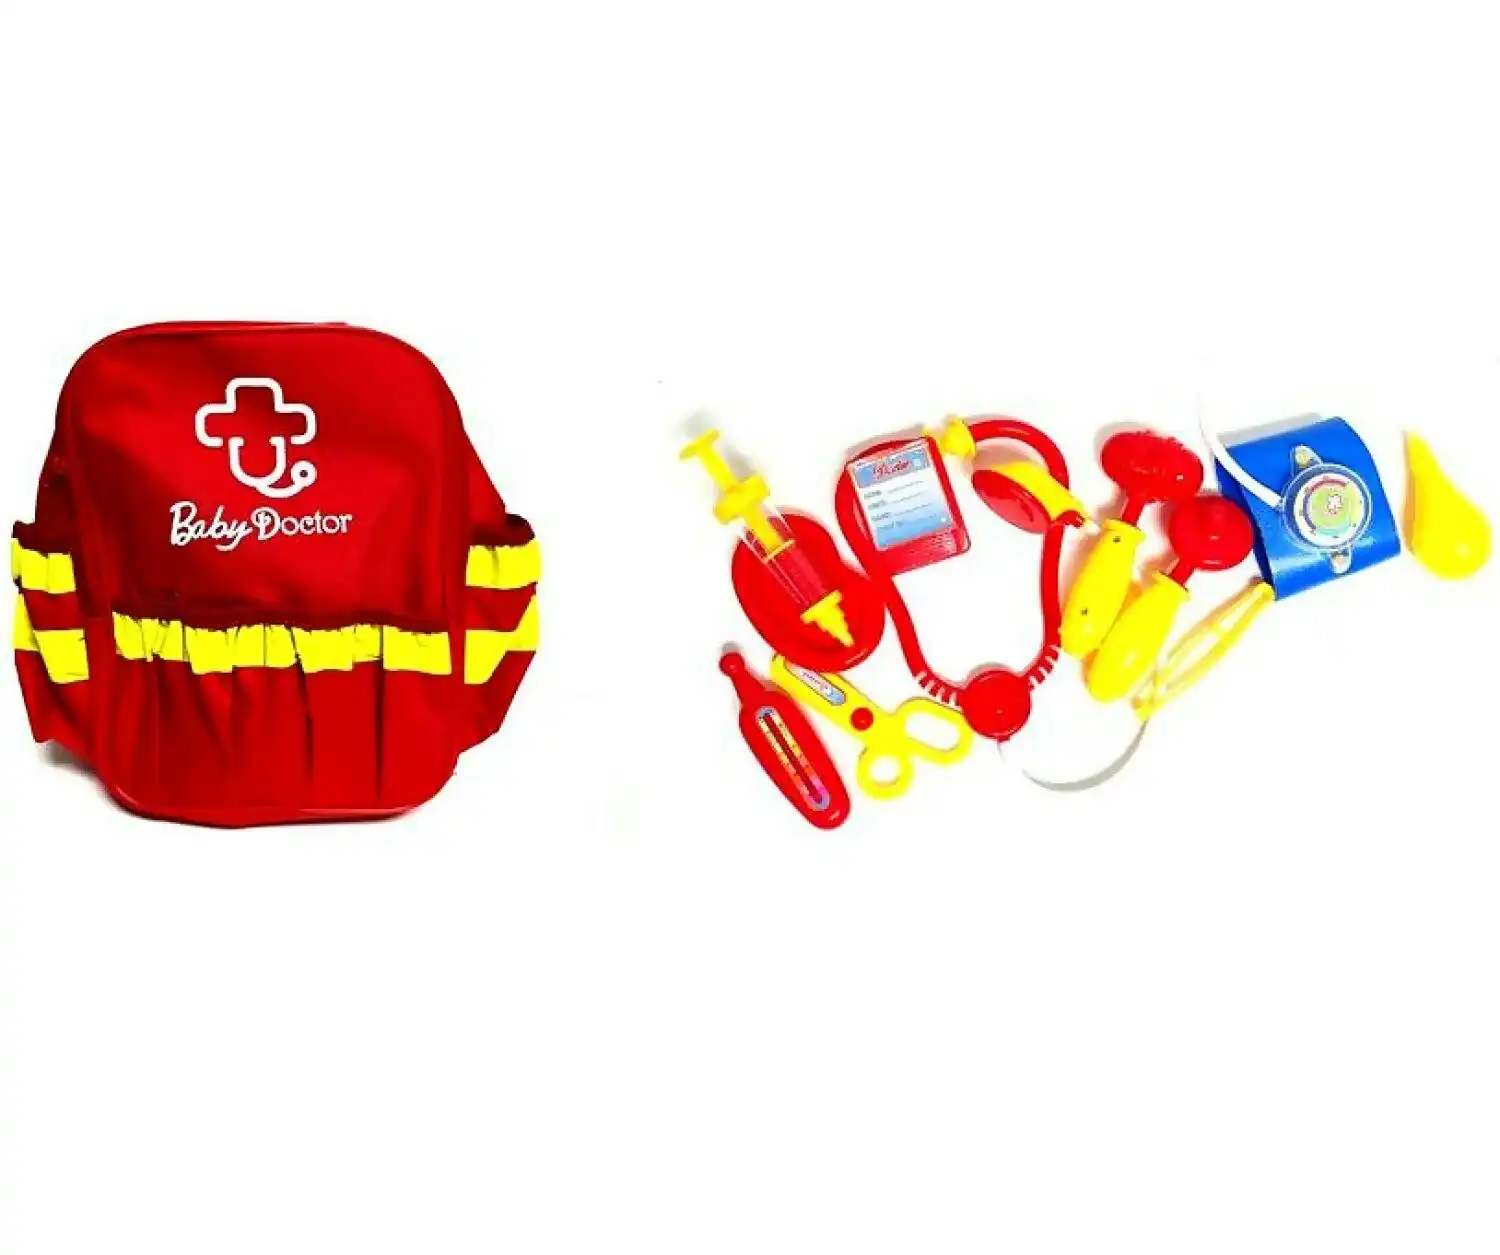 Baby Doctor - Doctor Emergency Backpack Set